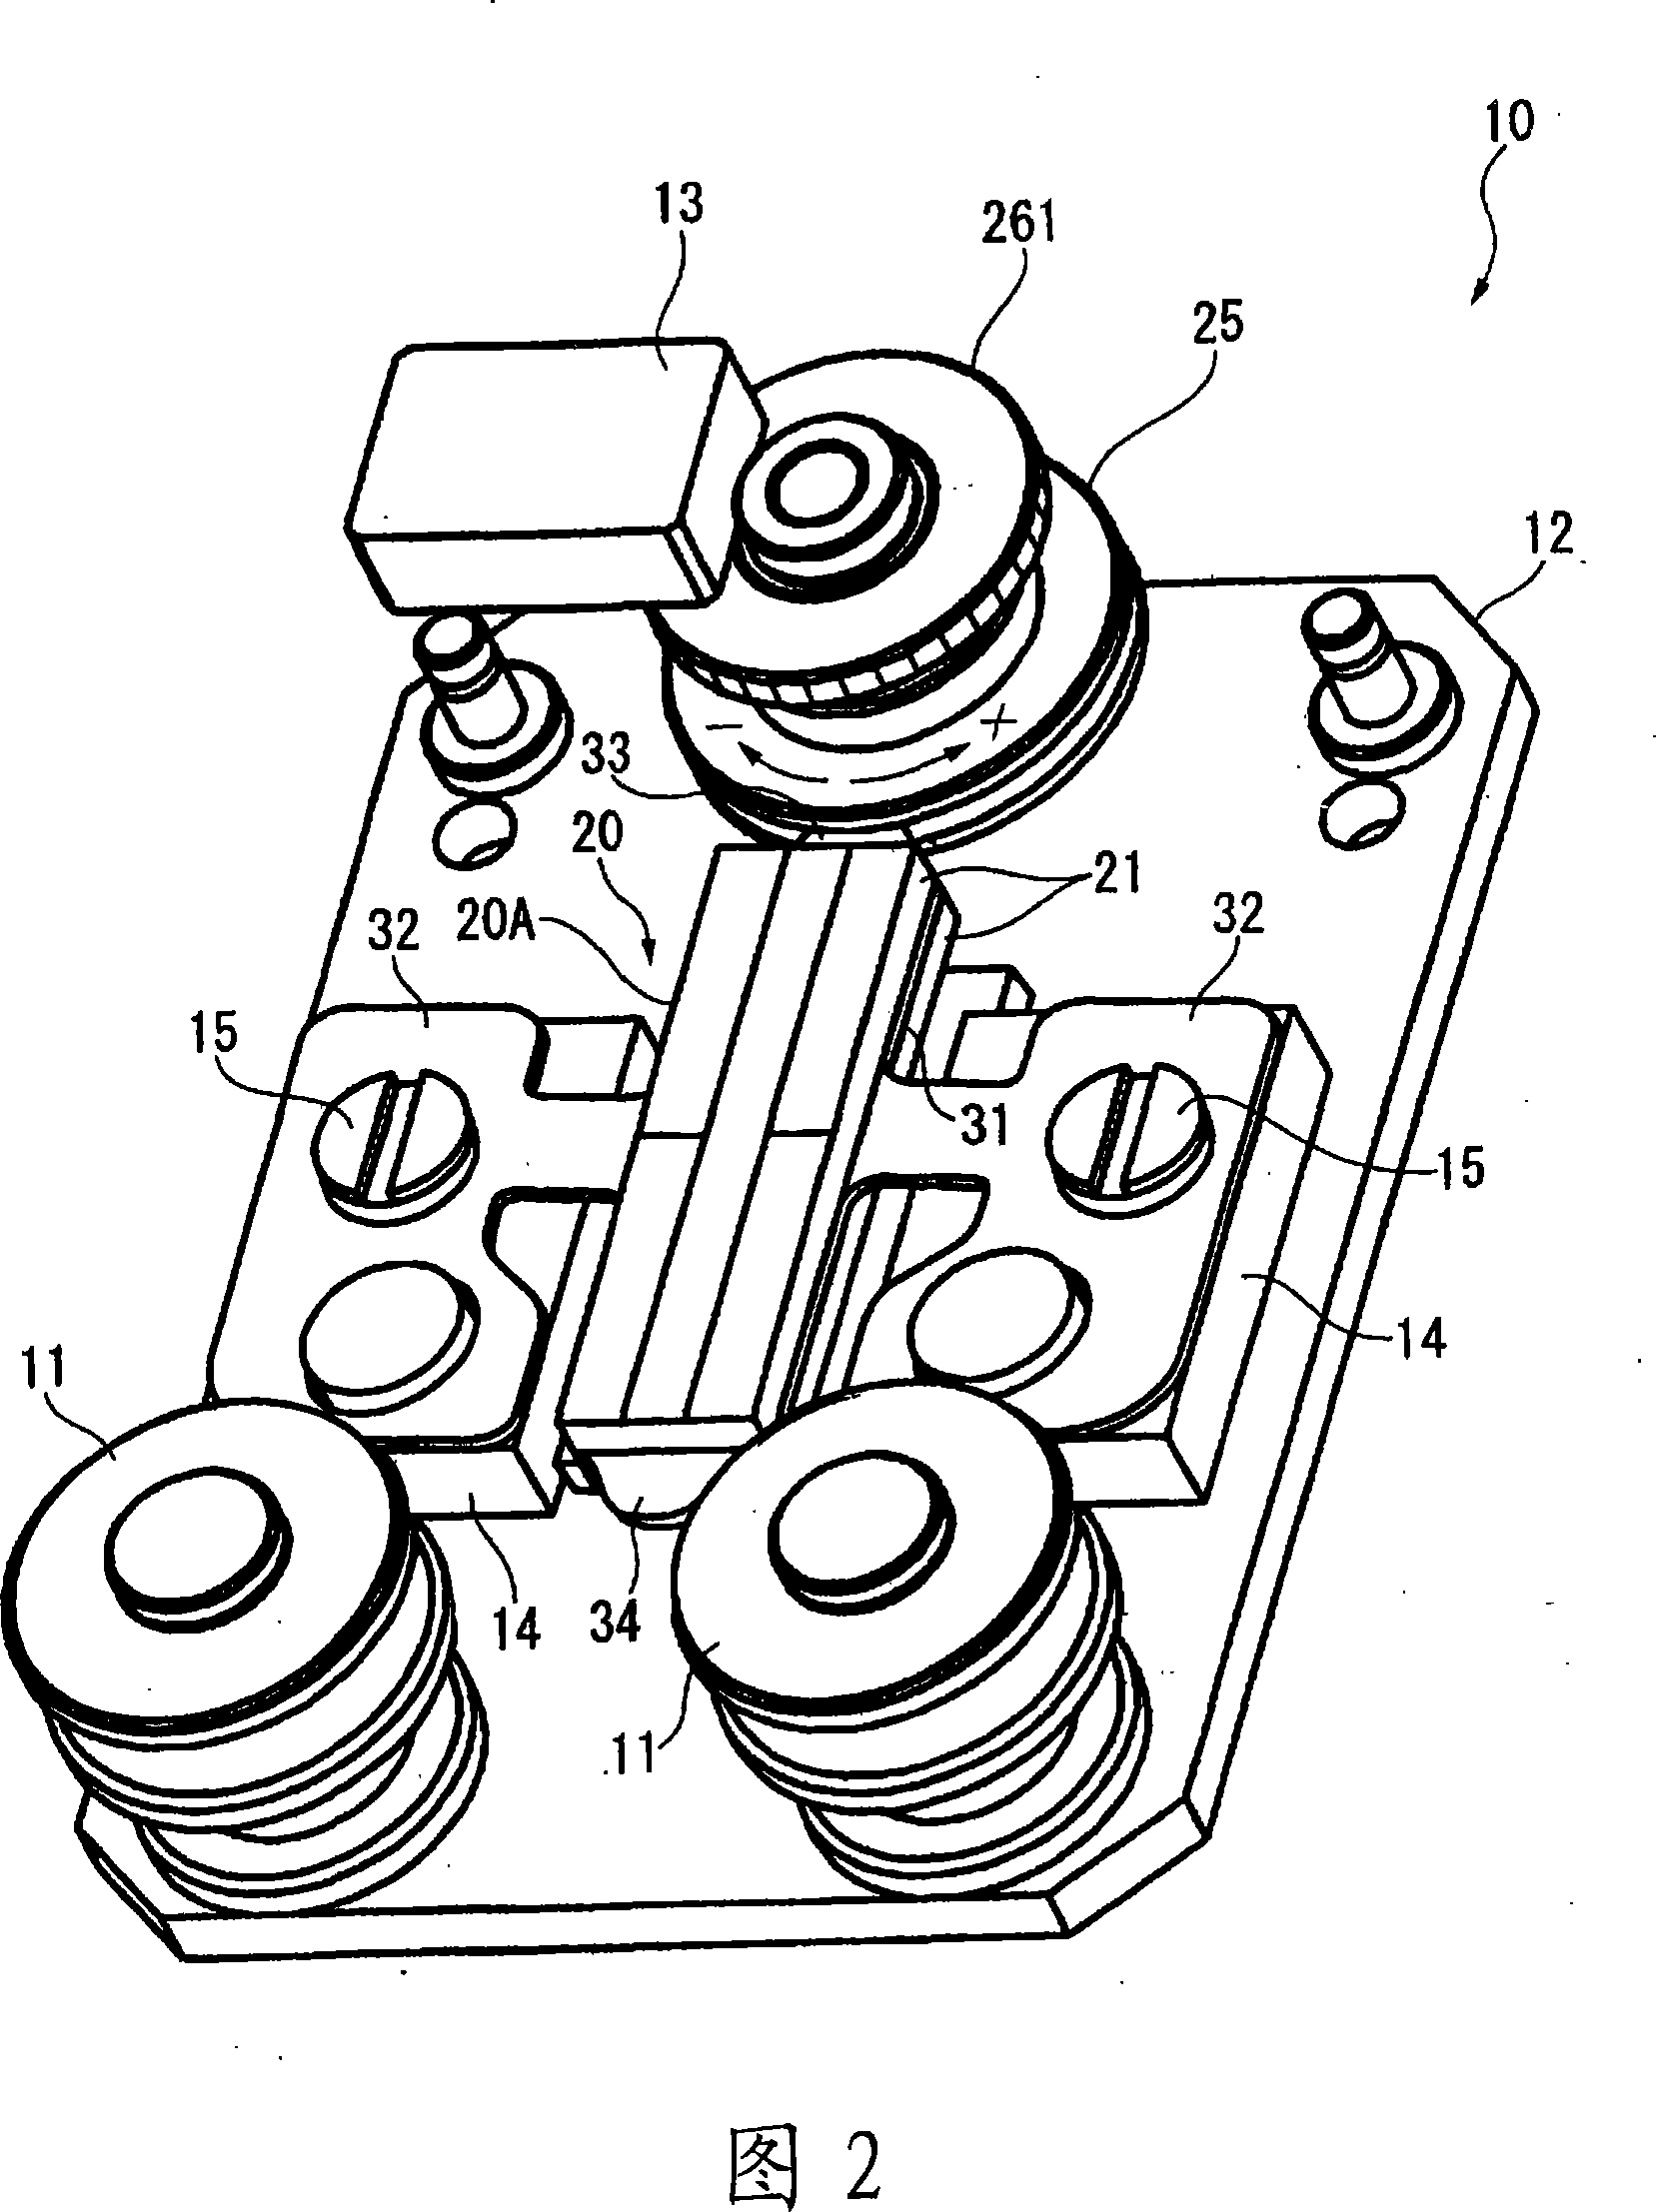 Piezoelectric transducer, piezoelectric actuator, and portable device